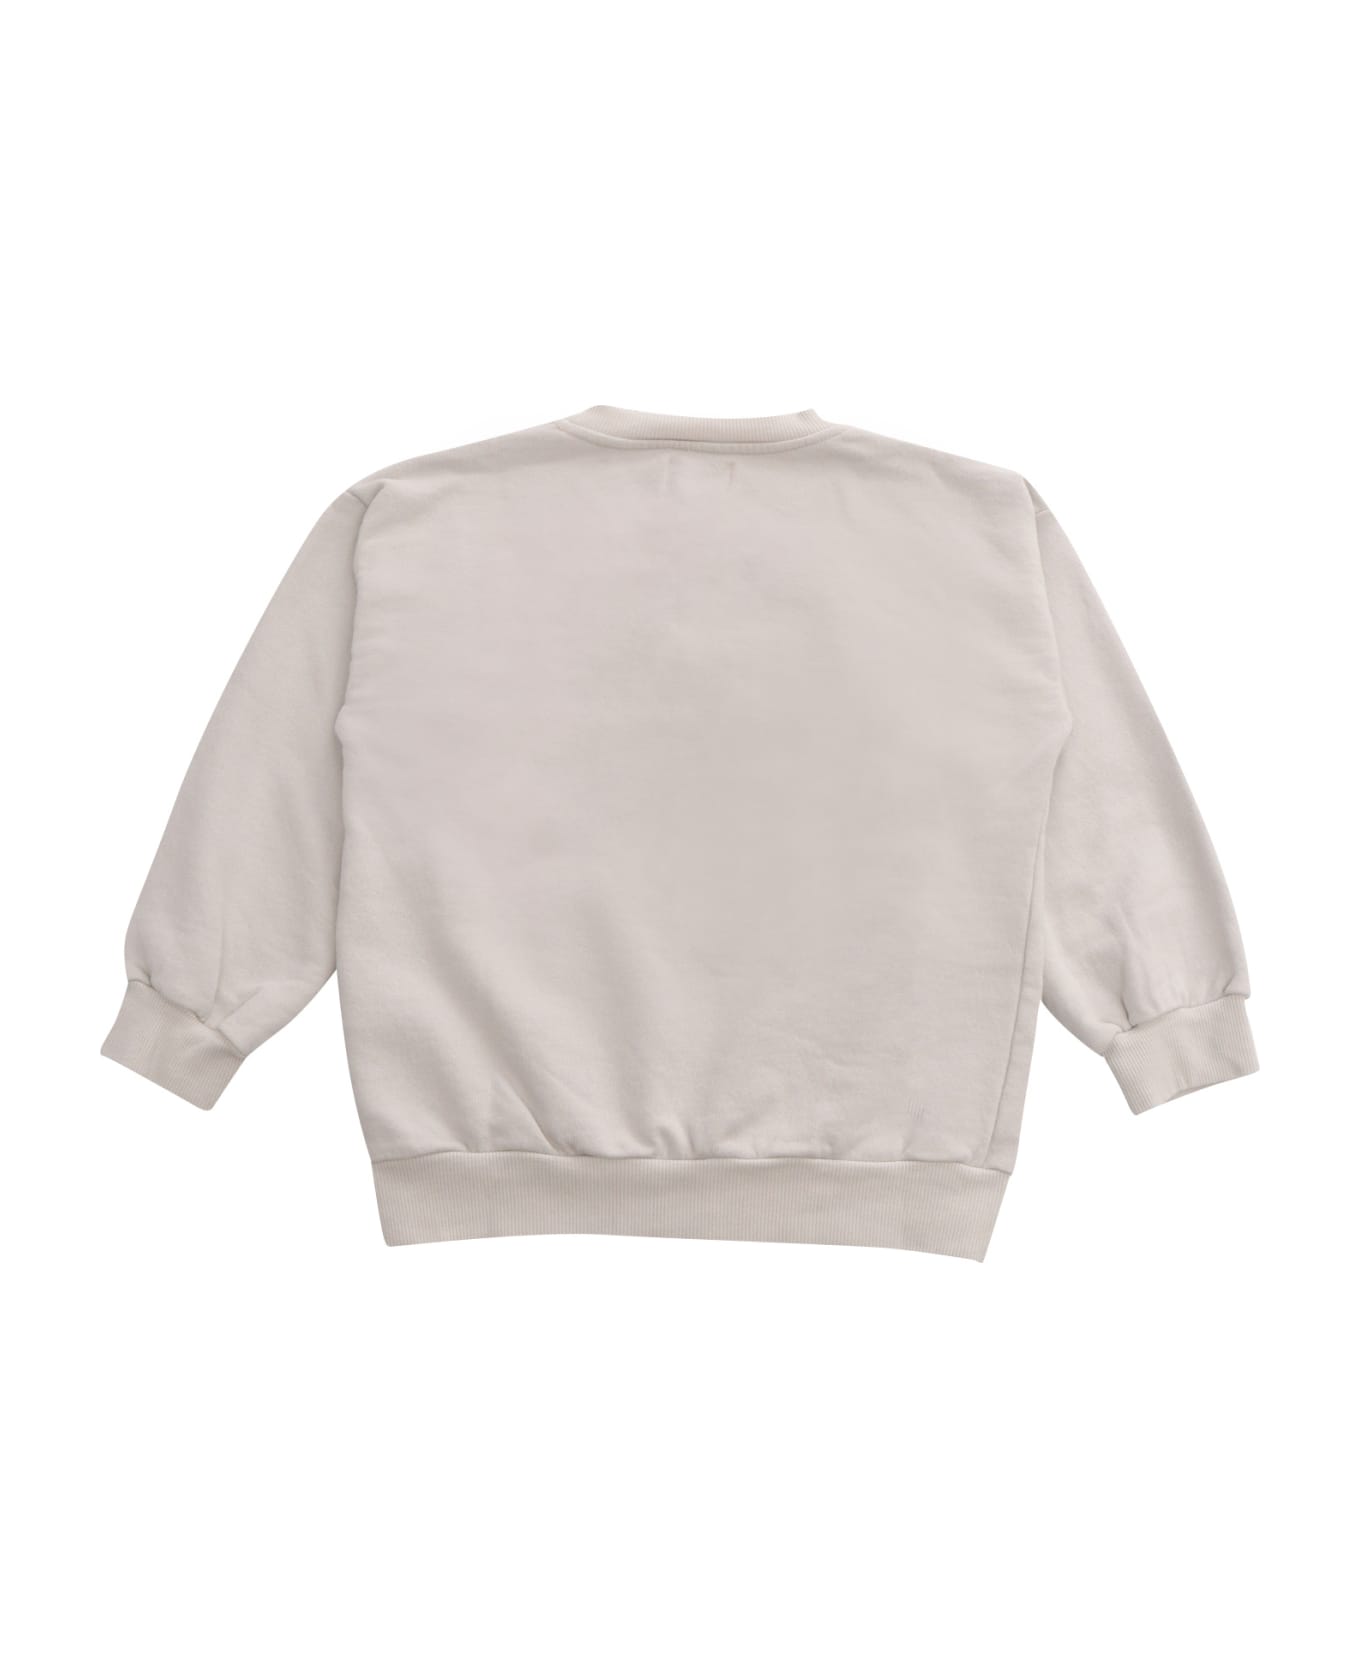 Bobo Choses White Sweatshirt With Print - BEIGE